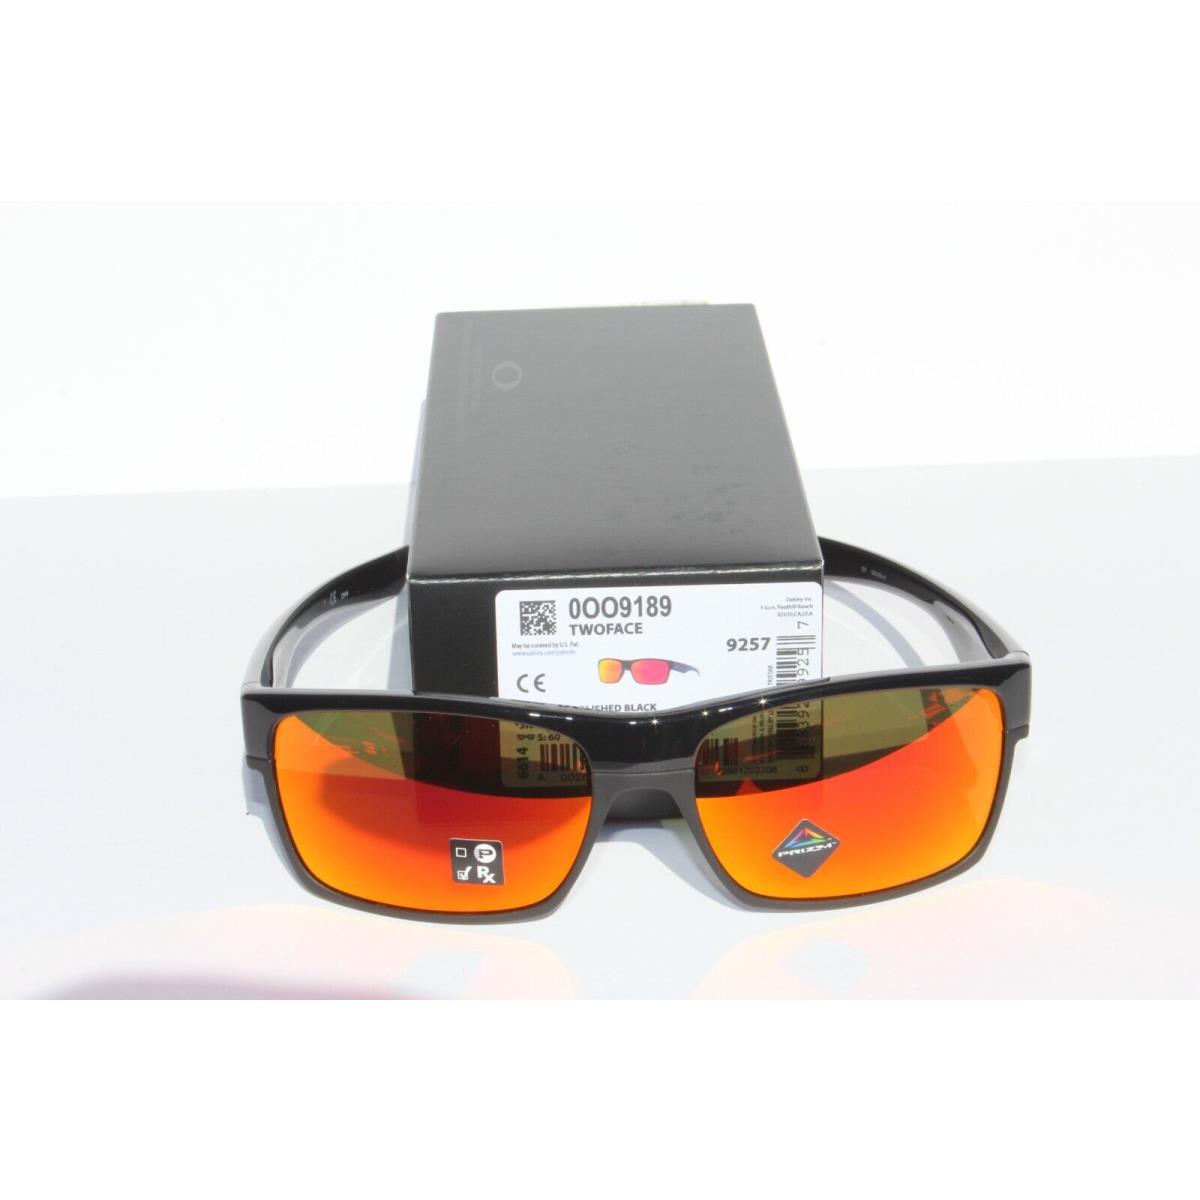 Oakley sunglasses Twoface - Black Frame, Ruby Lens 6